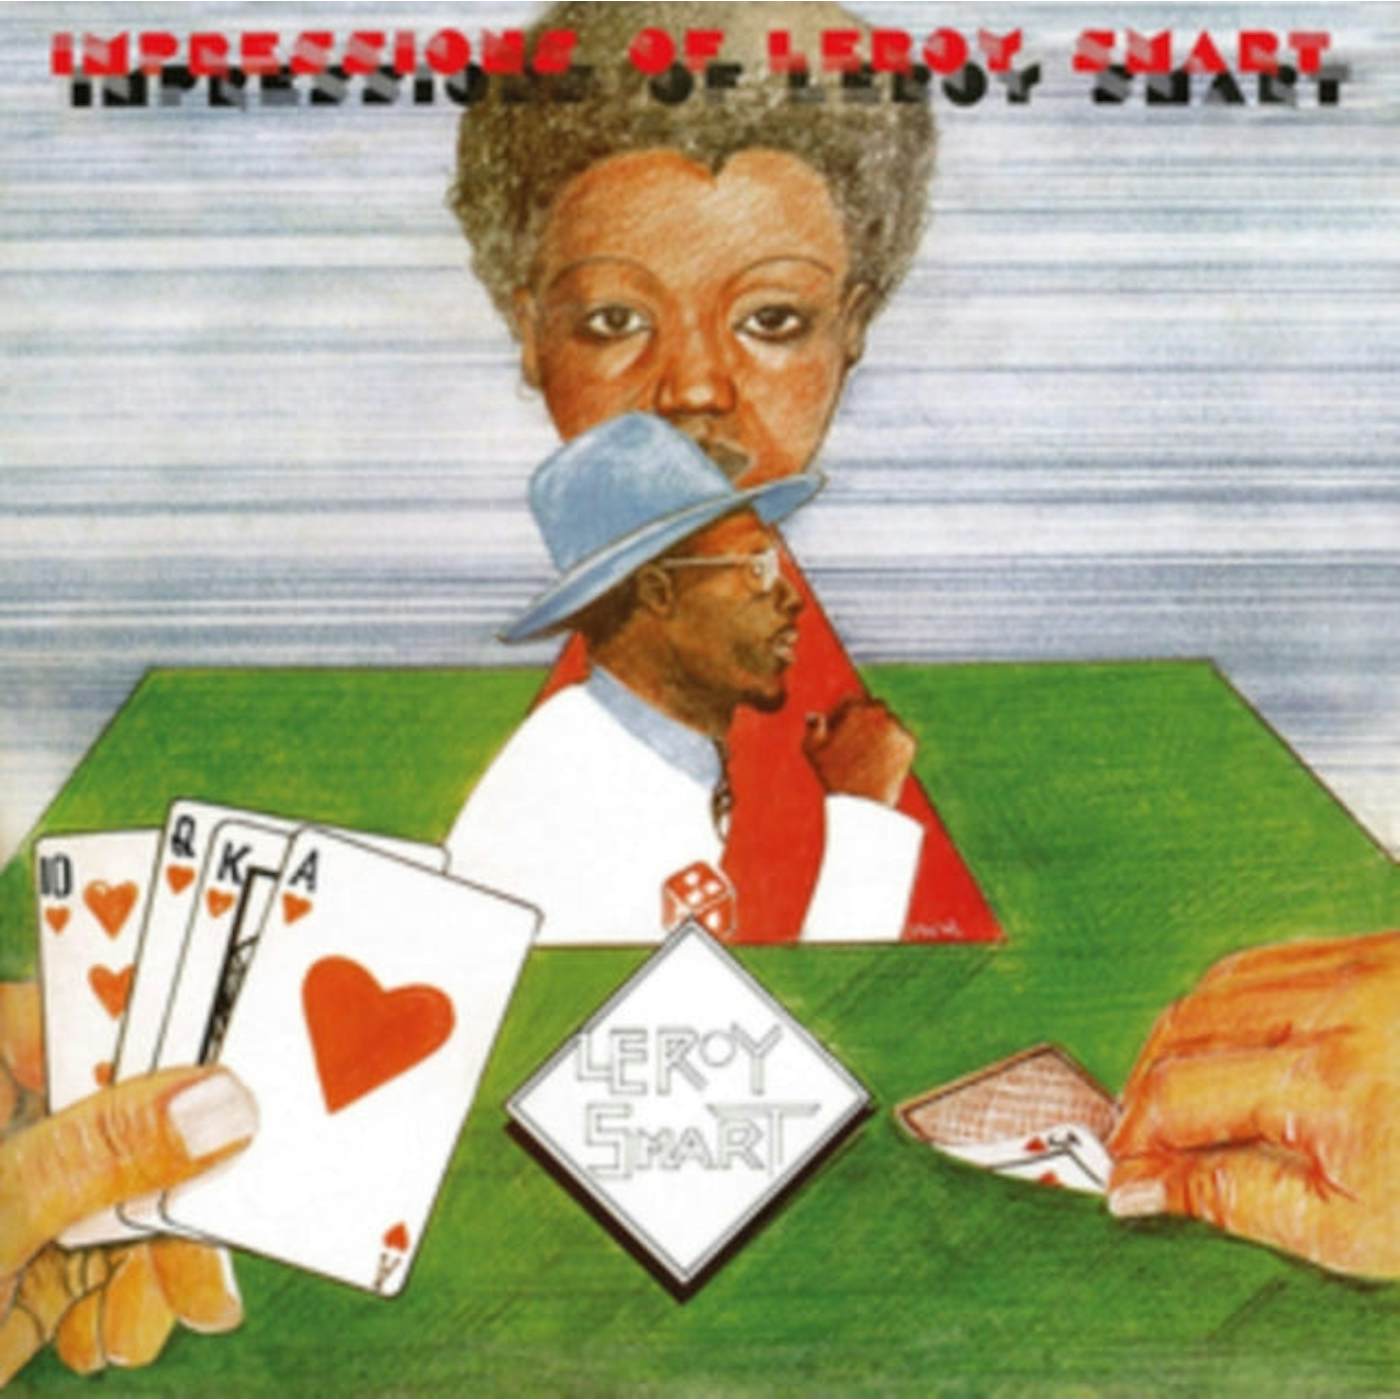 Leroy Smart LP - Impressions (Vinyl)